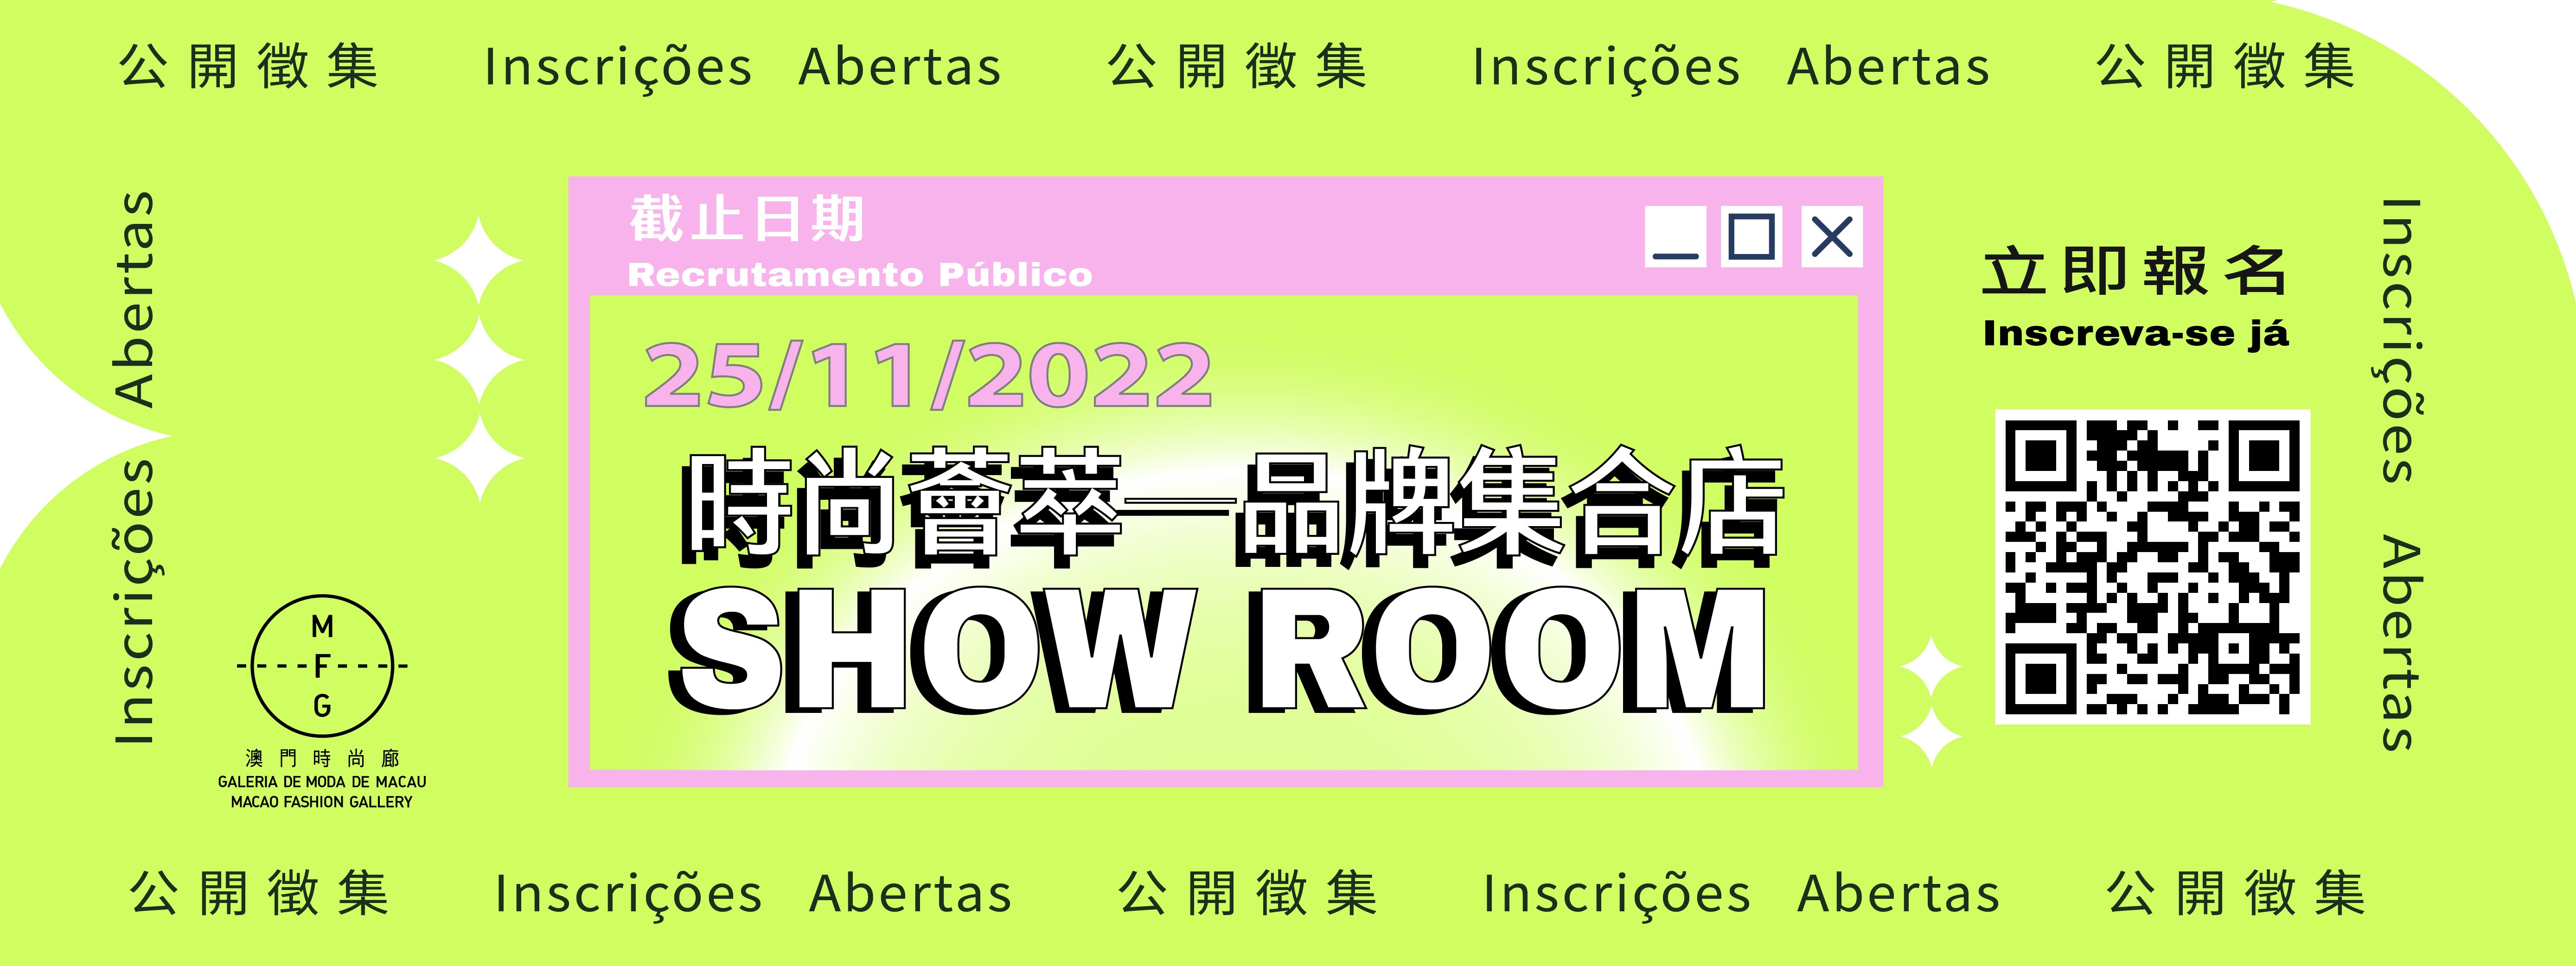 MFG Web banner-2023 showroom application